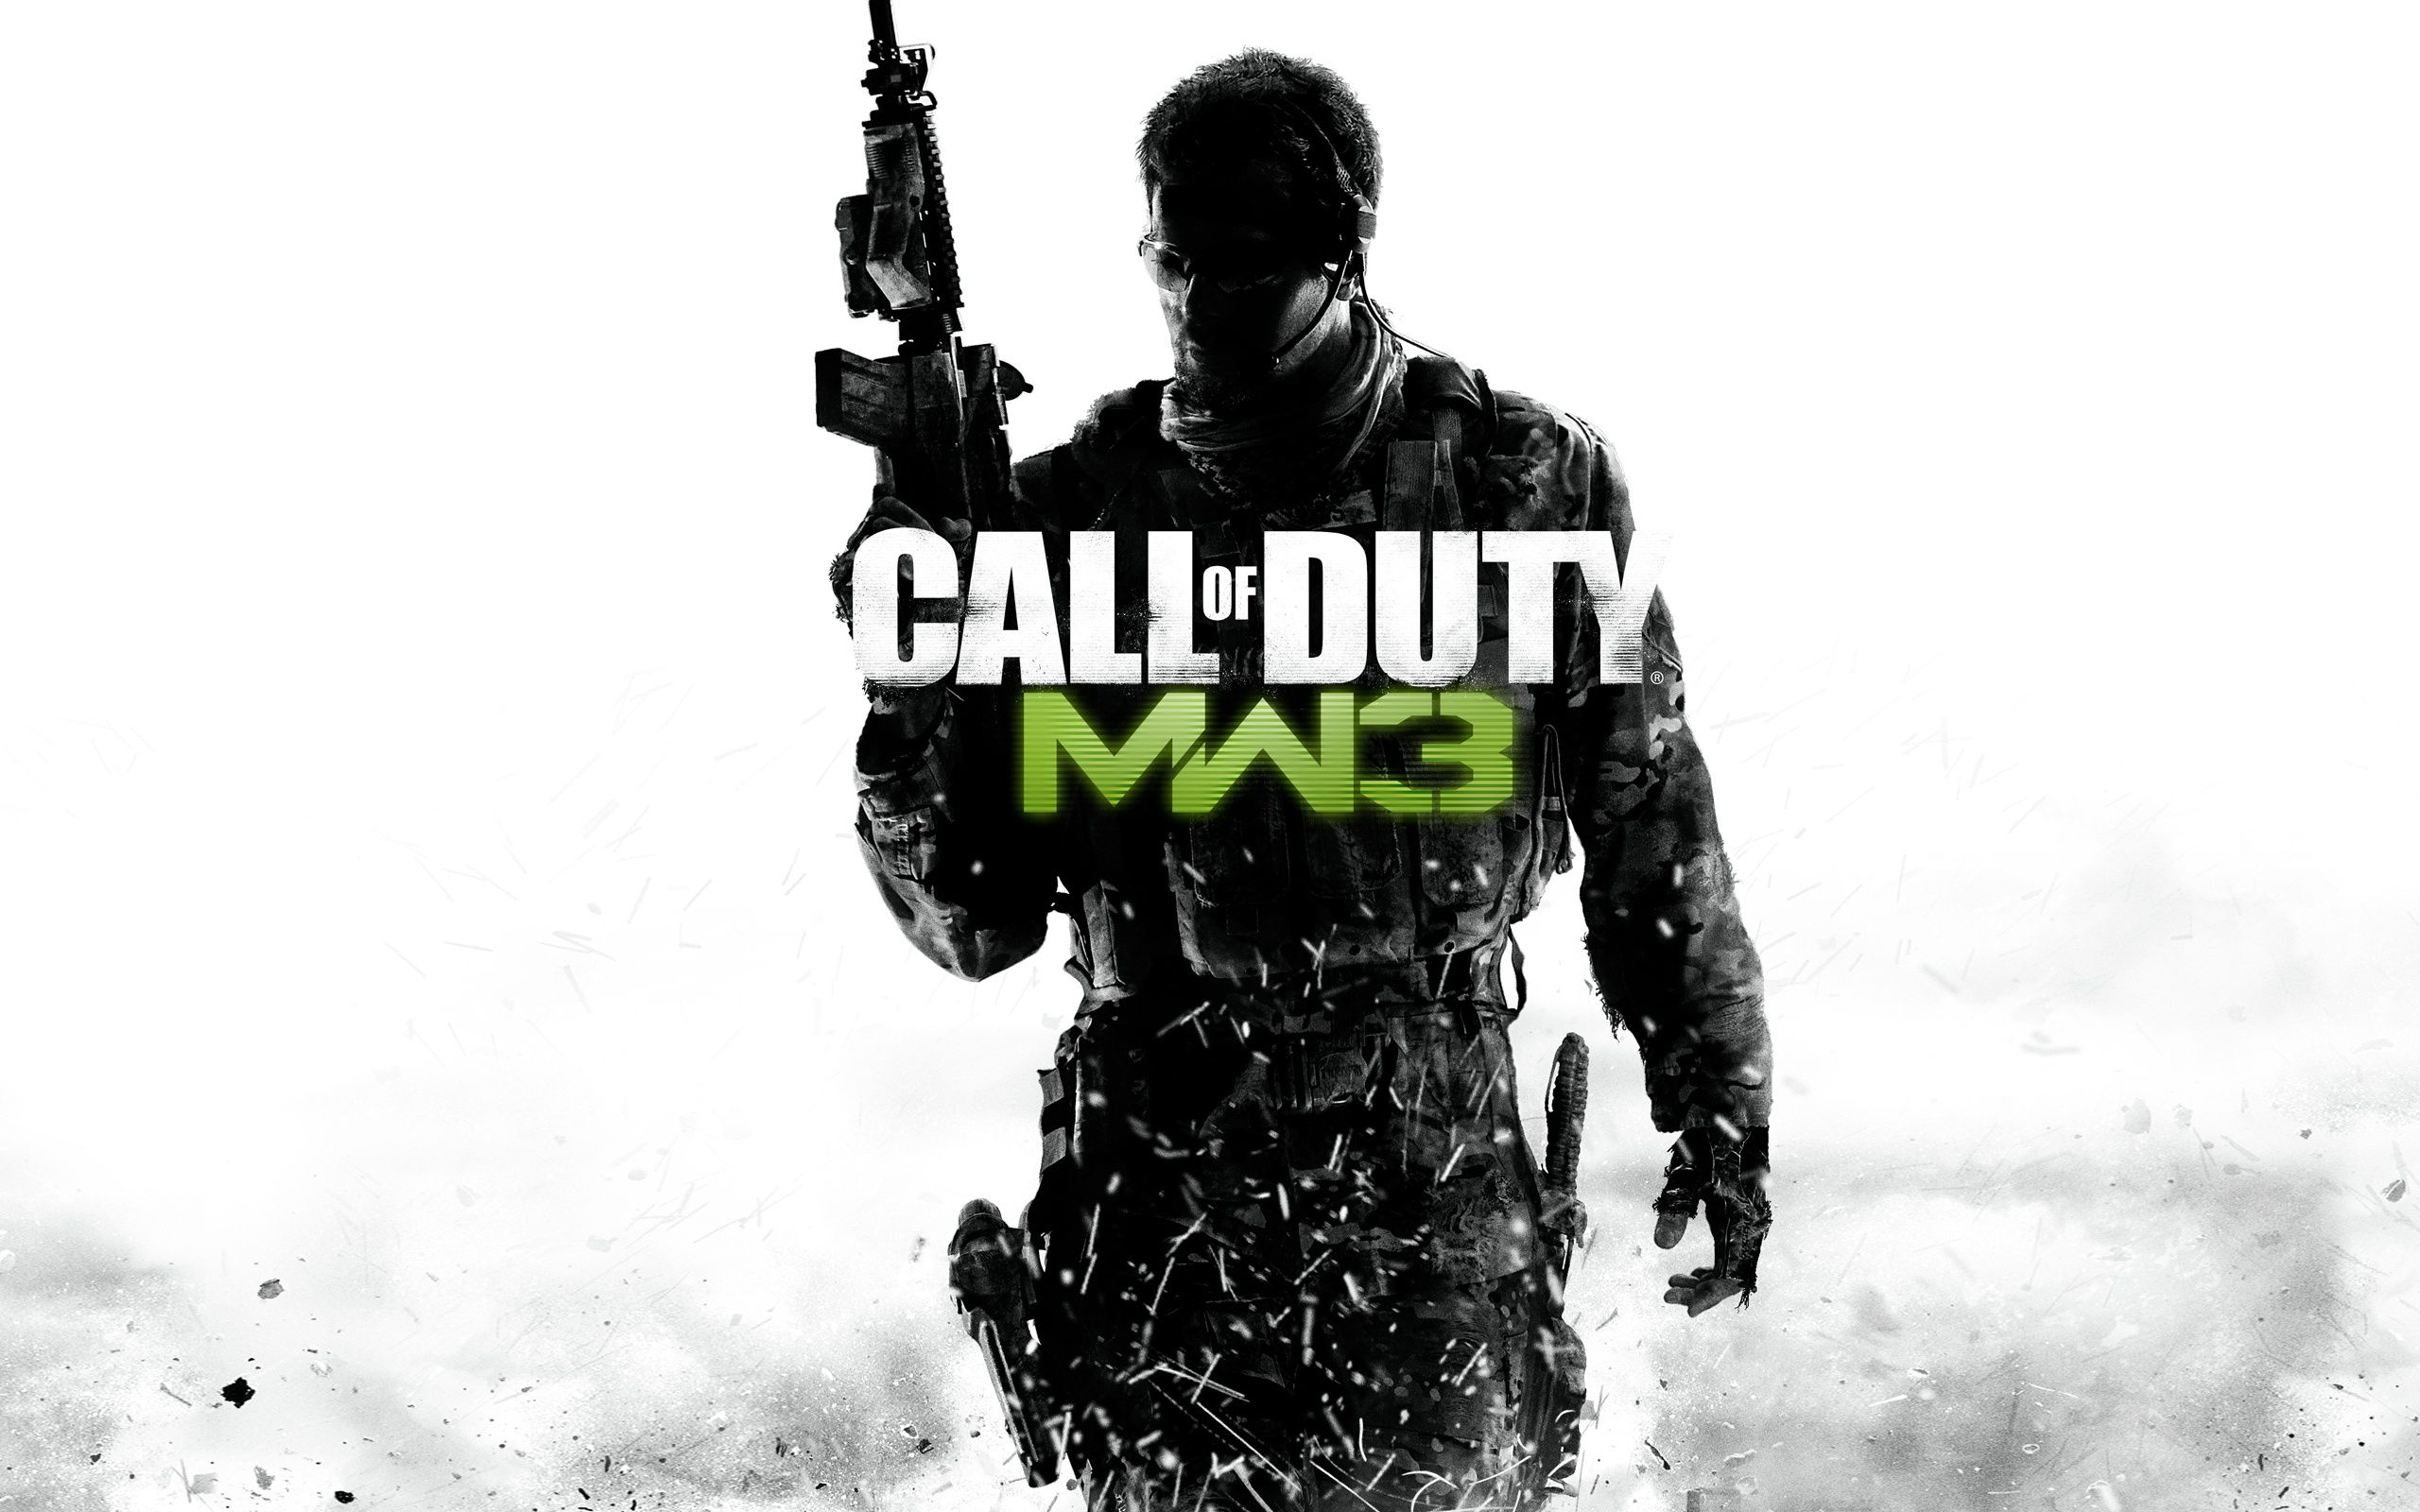 Call Of Duty Modern Warfare 3 Wallpaper in jpg format for free download